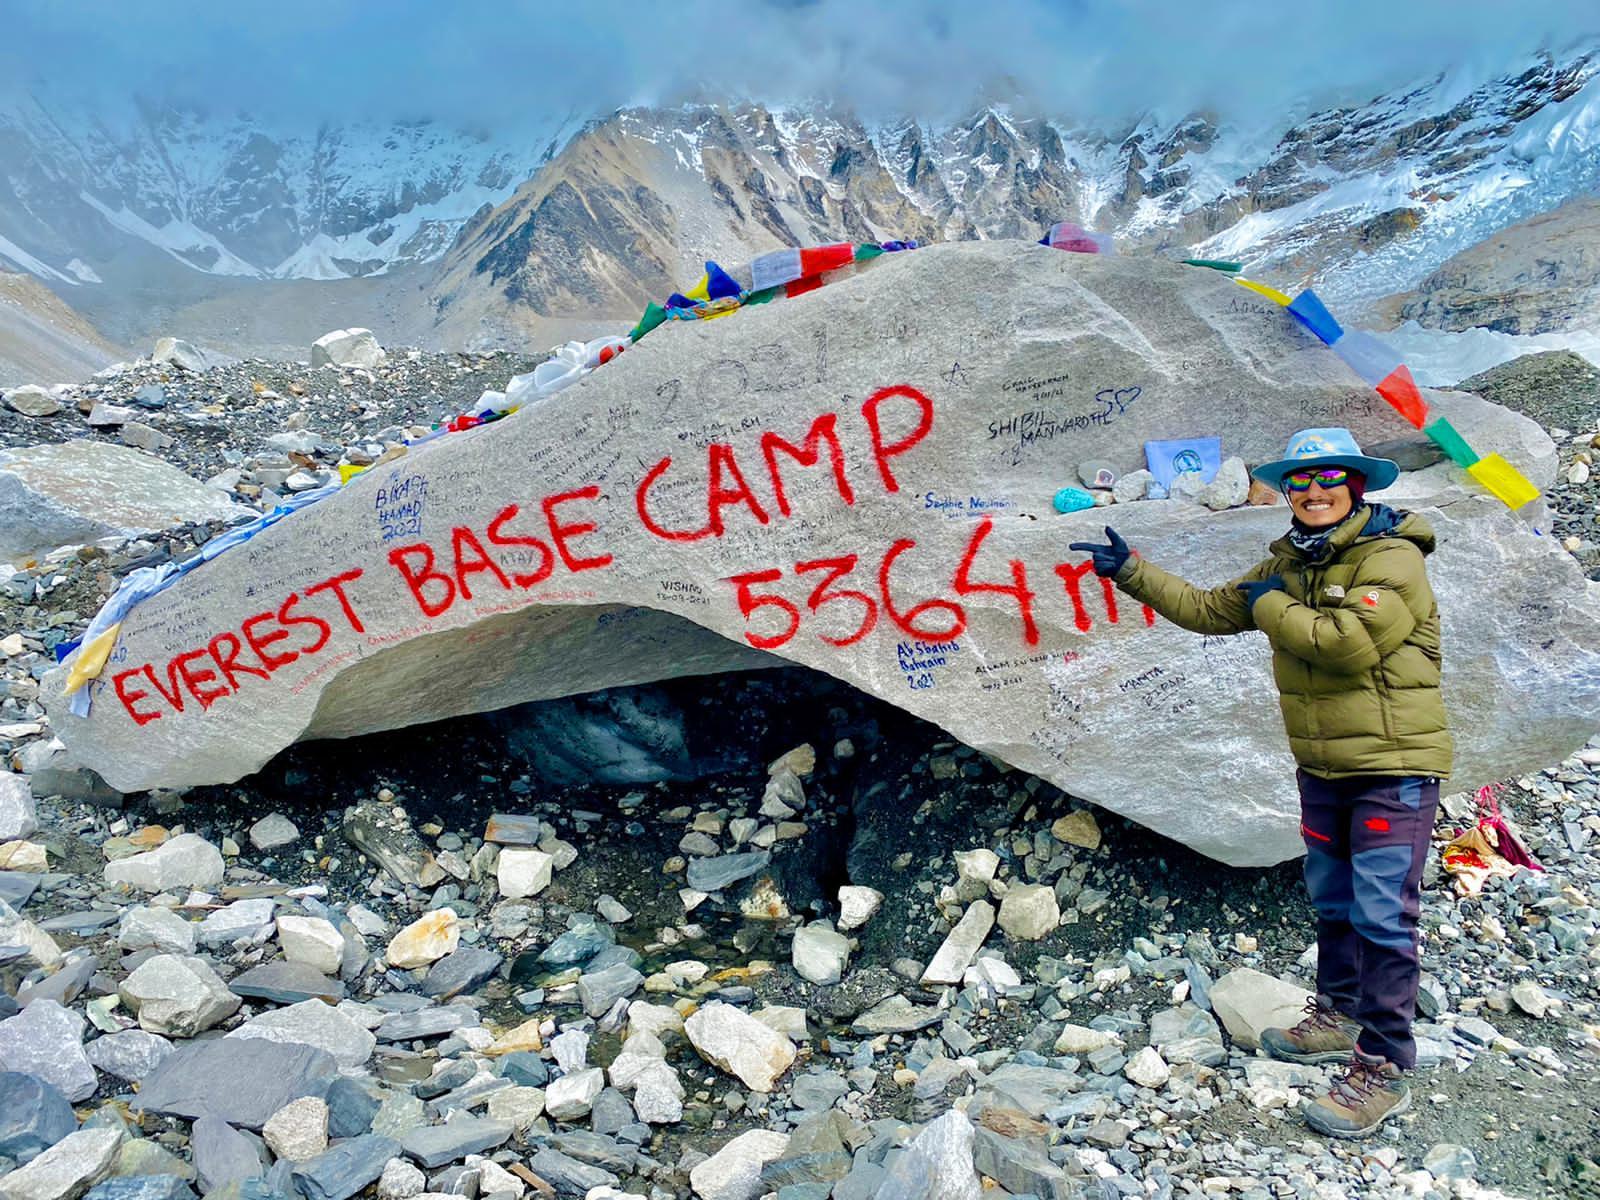 Everest Trekking in Nepal